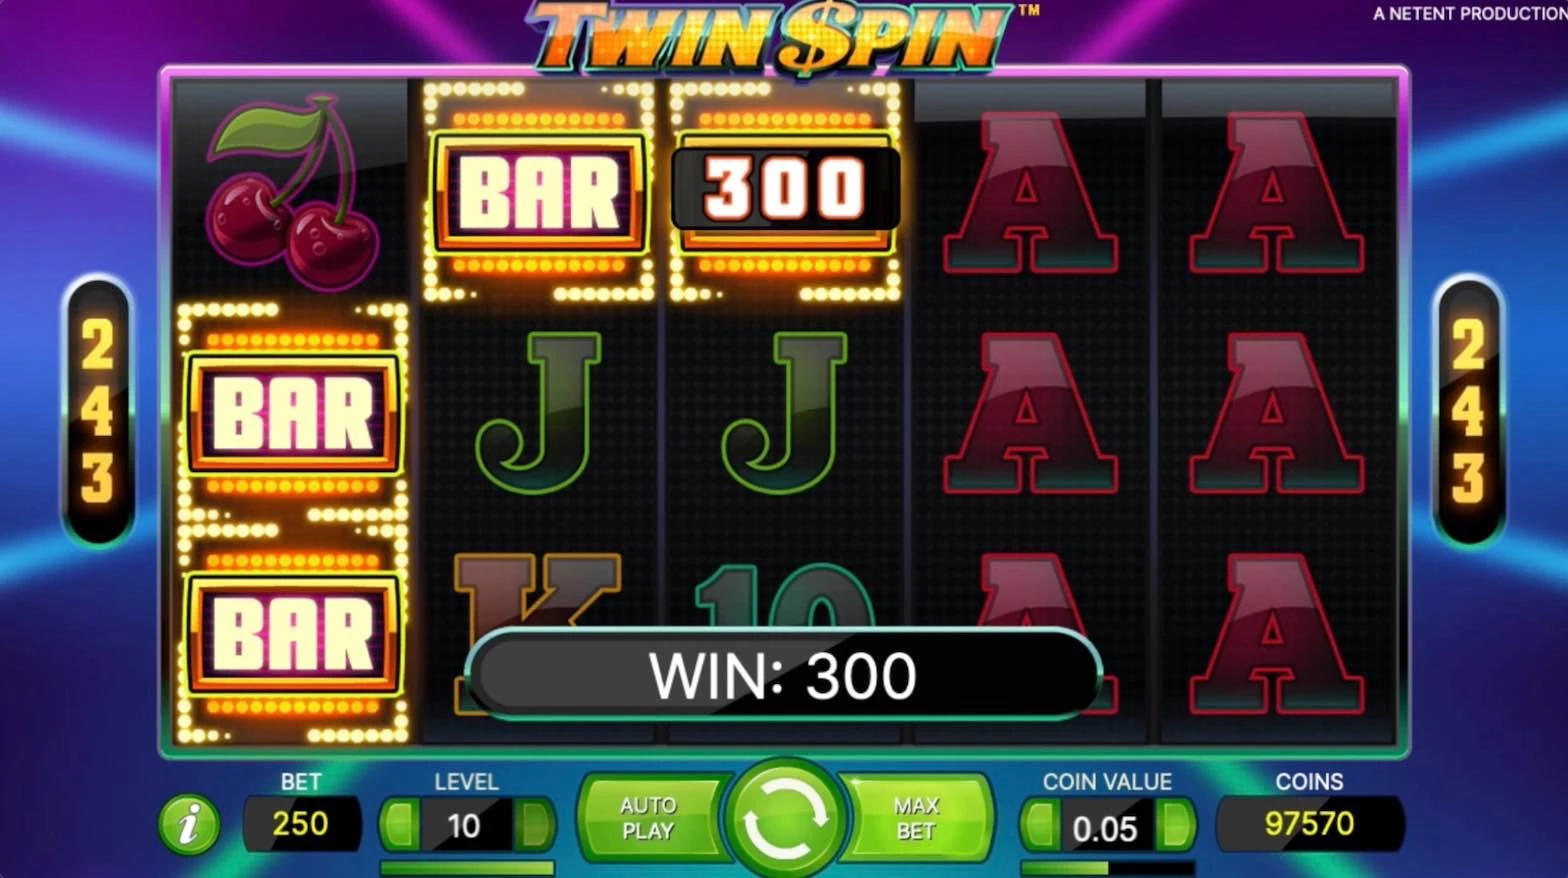 Twin Spin Slot by NetEnt - 3 Bar Won $300